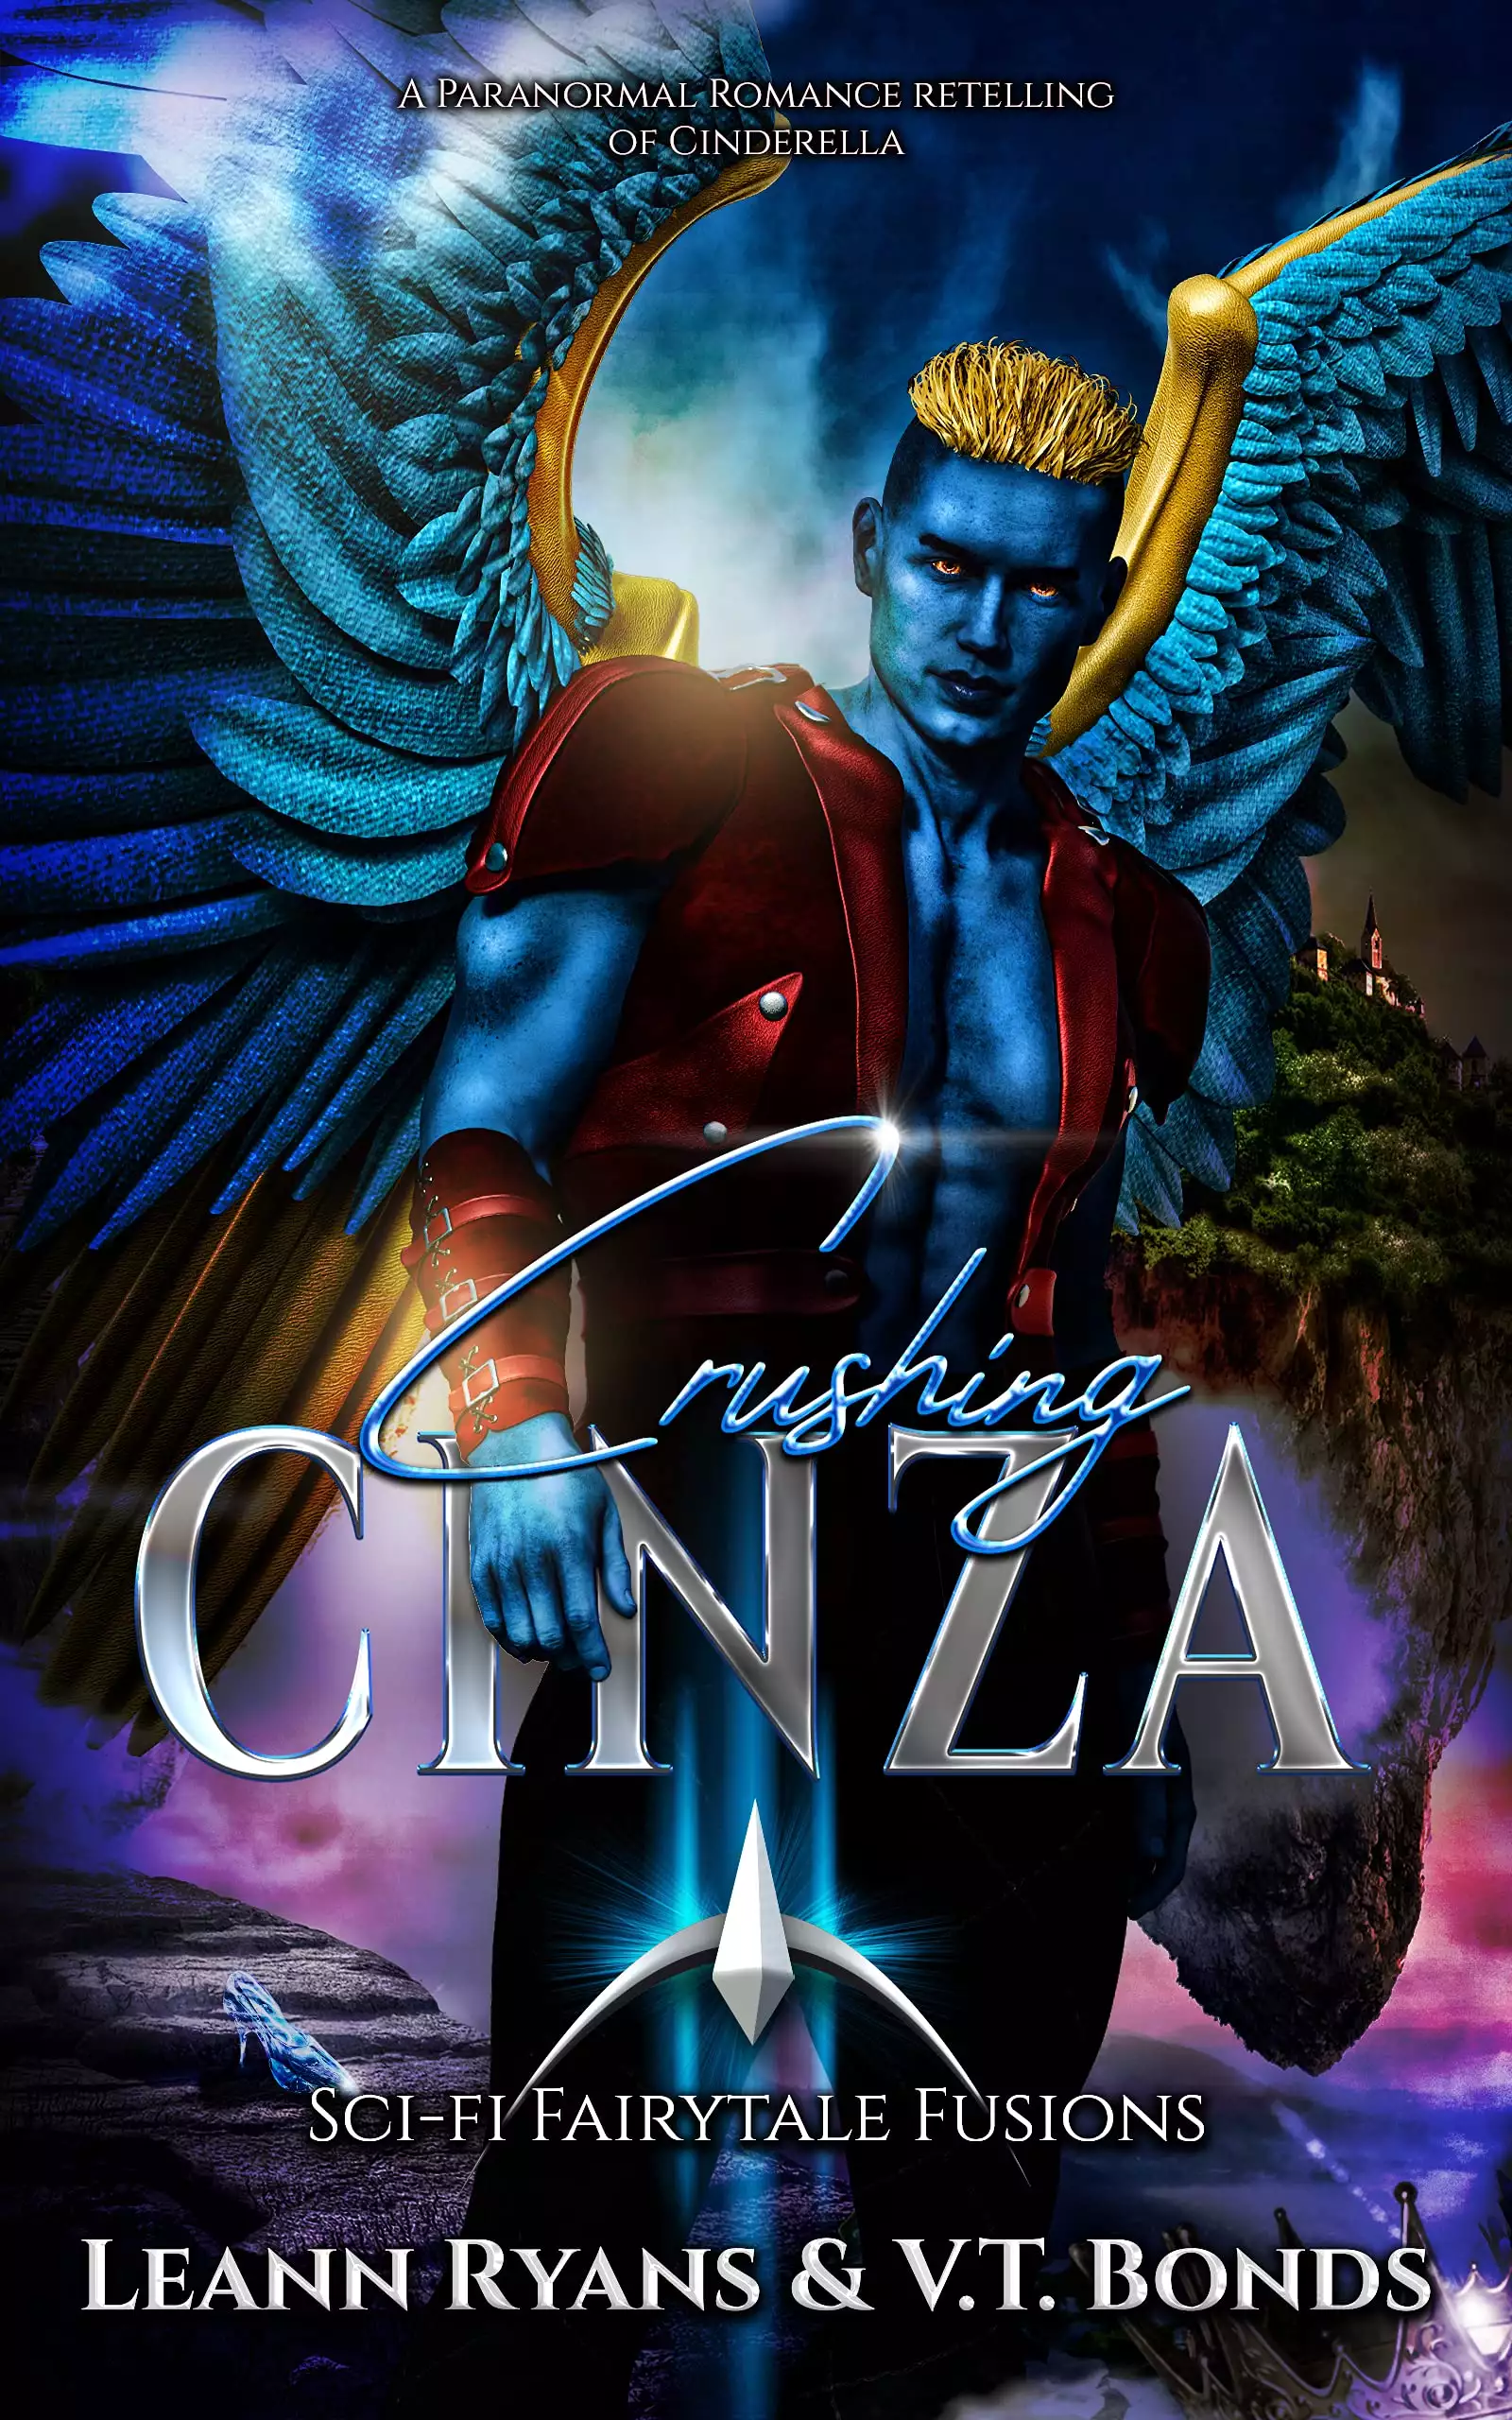 Crushing Cinza: A Paranormal Romance retelling of Cinderella